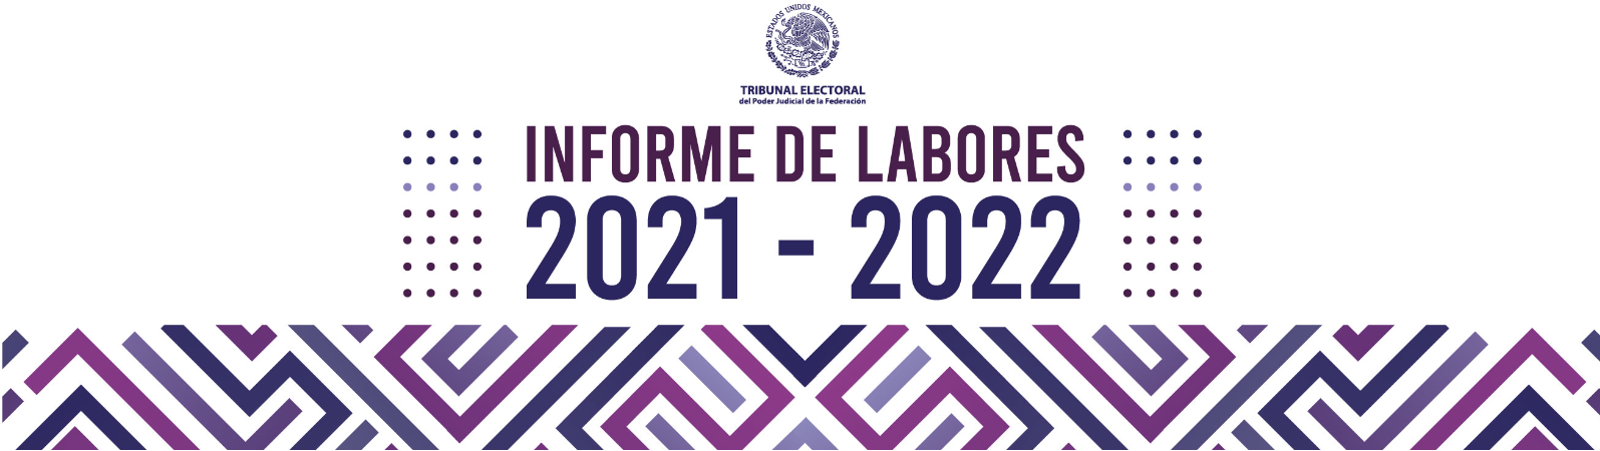 INFORME DE LABORES 2021-2022 DEL TEPJF